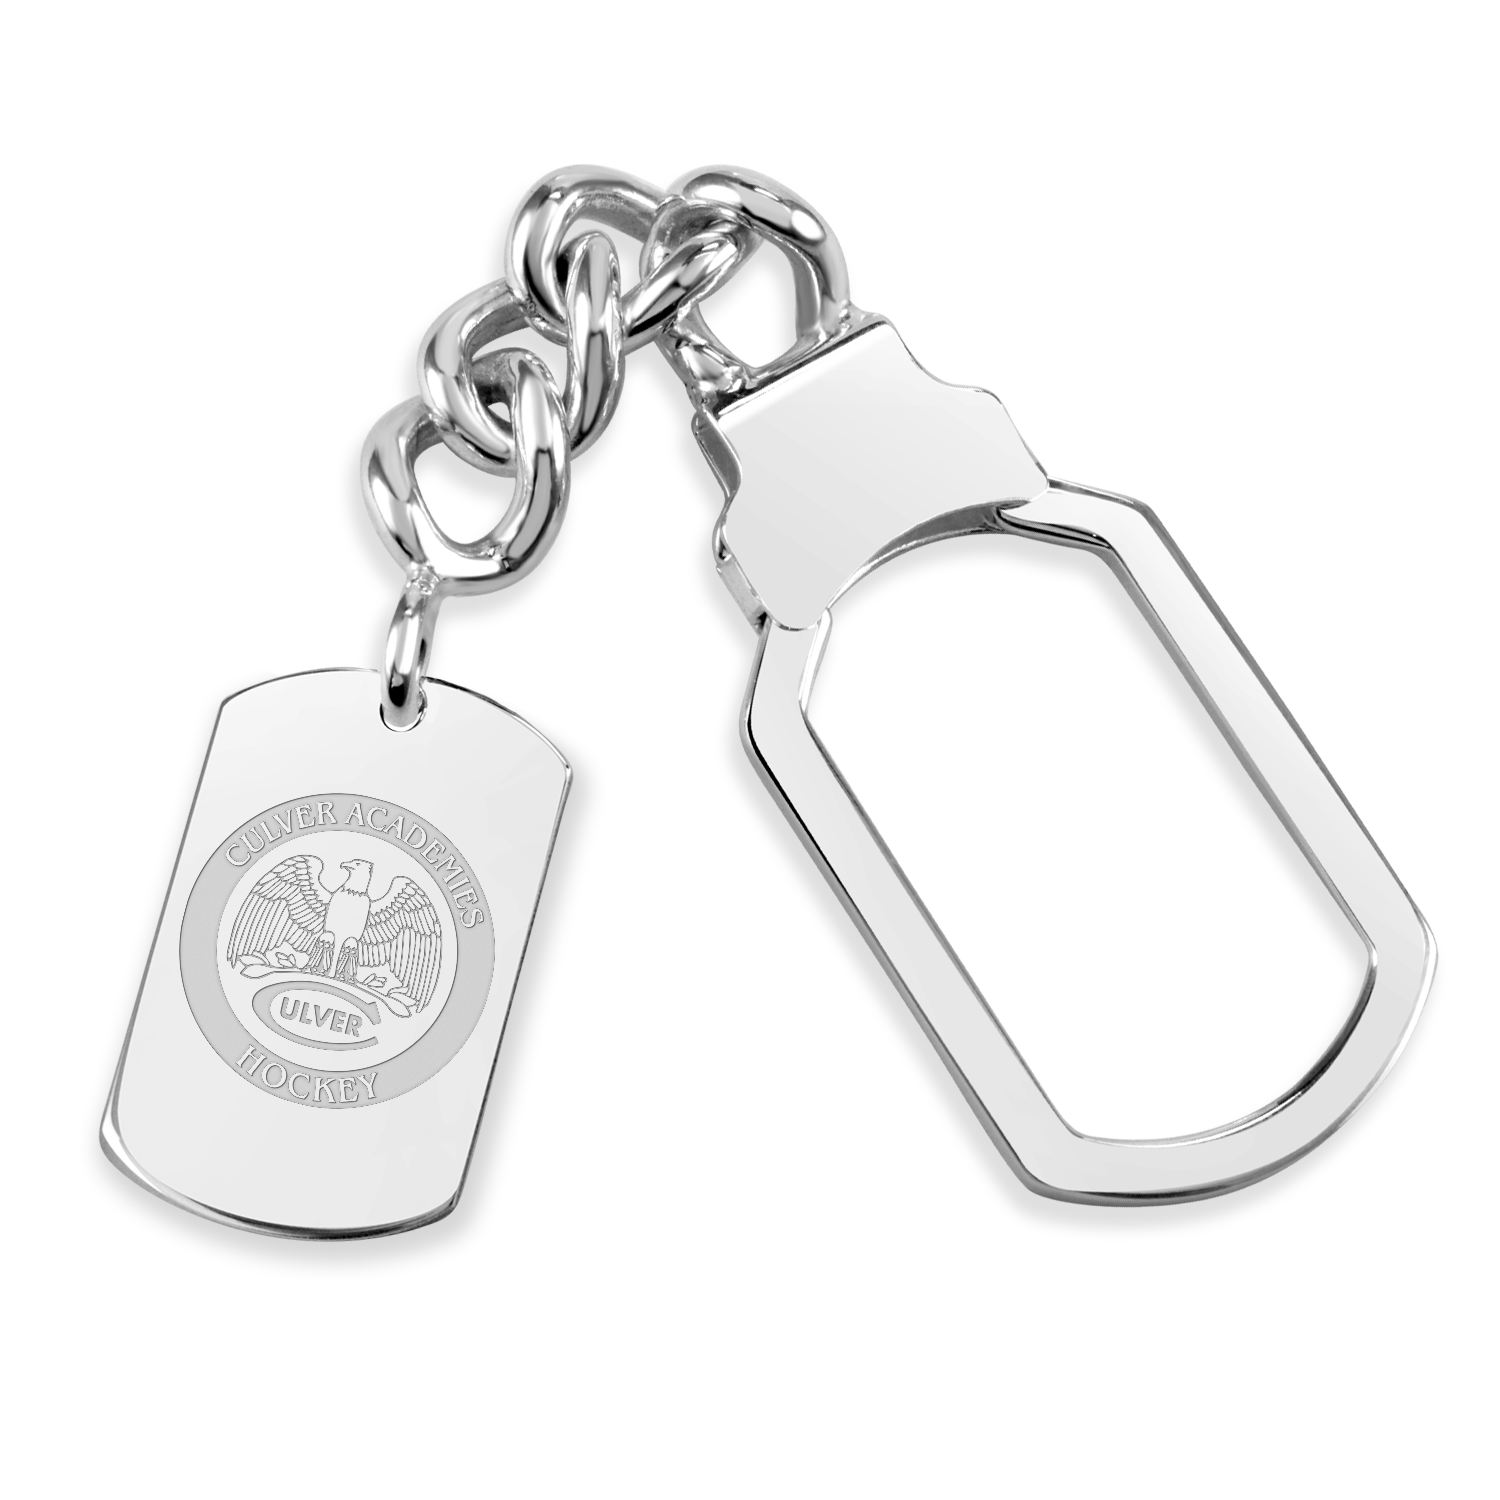 Culver Academy Tension Lock Key Chain Tag